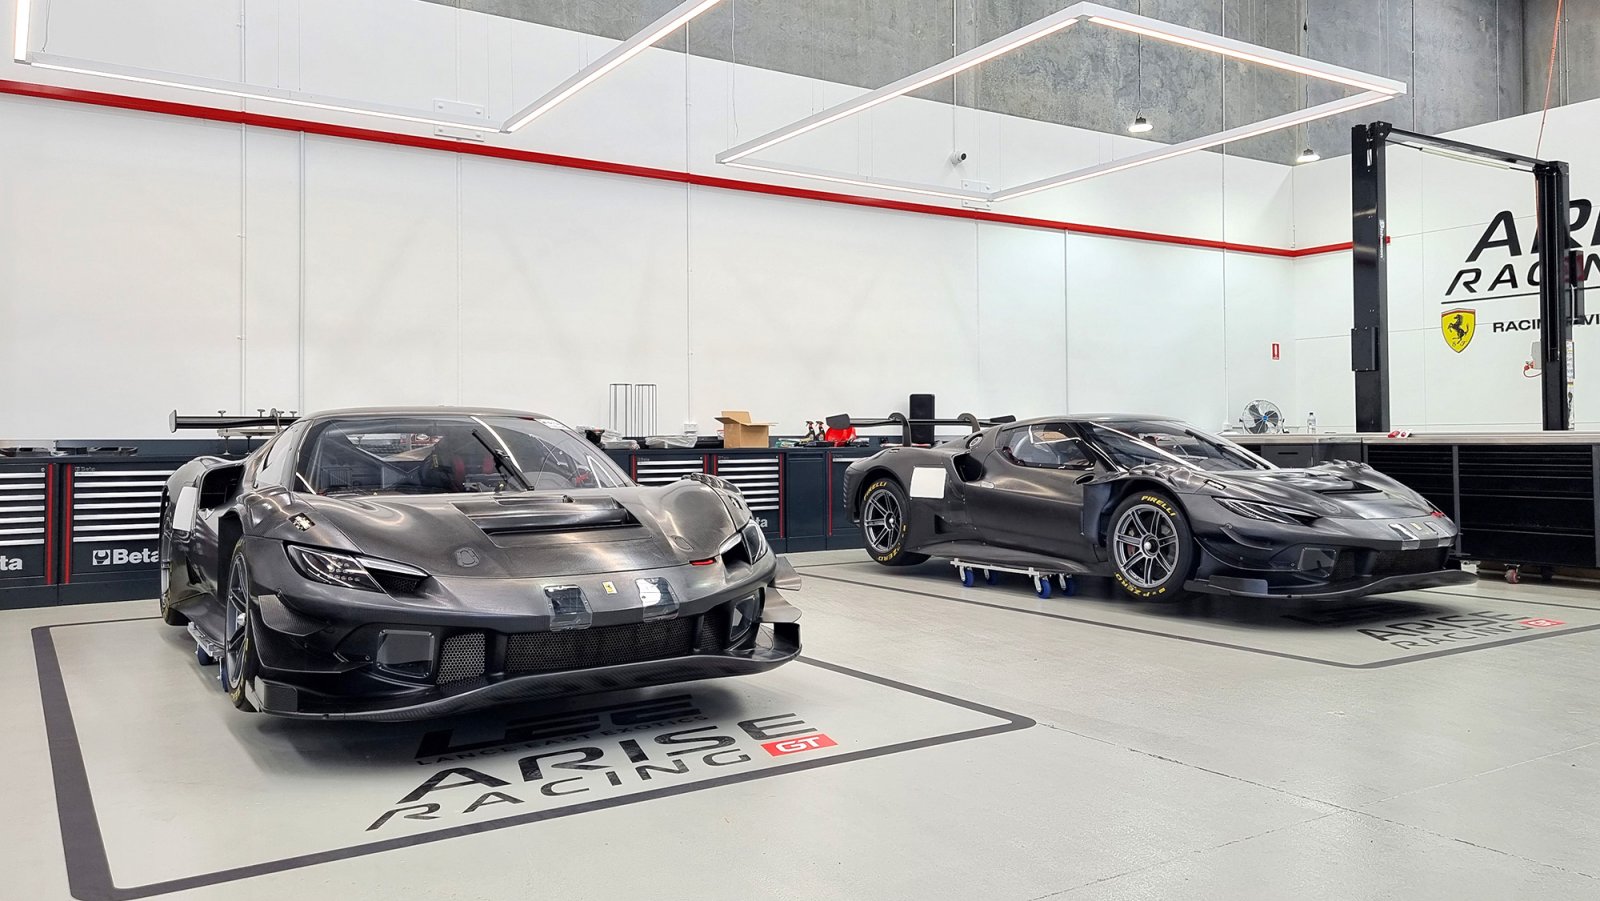 Ferrari GT3s arrive at Arise Racing GT